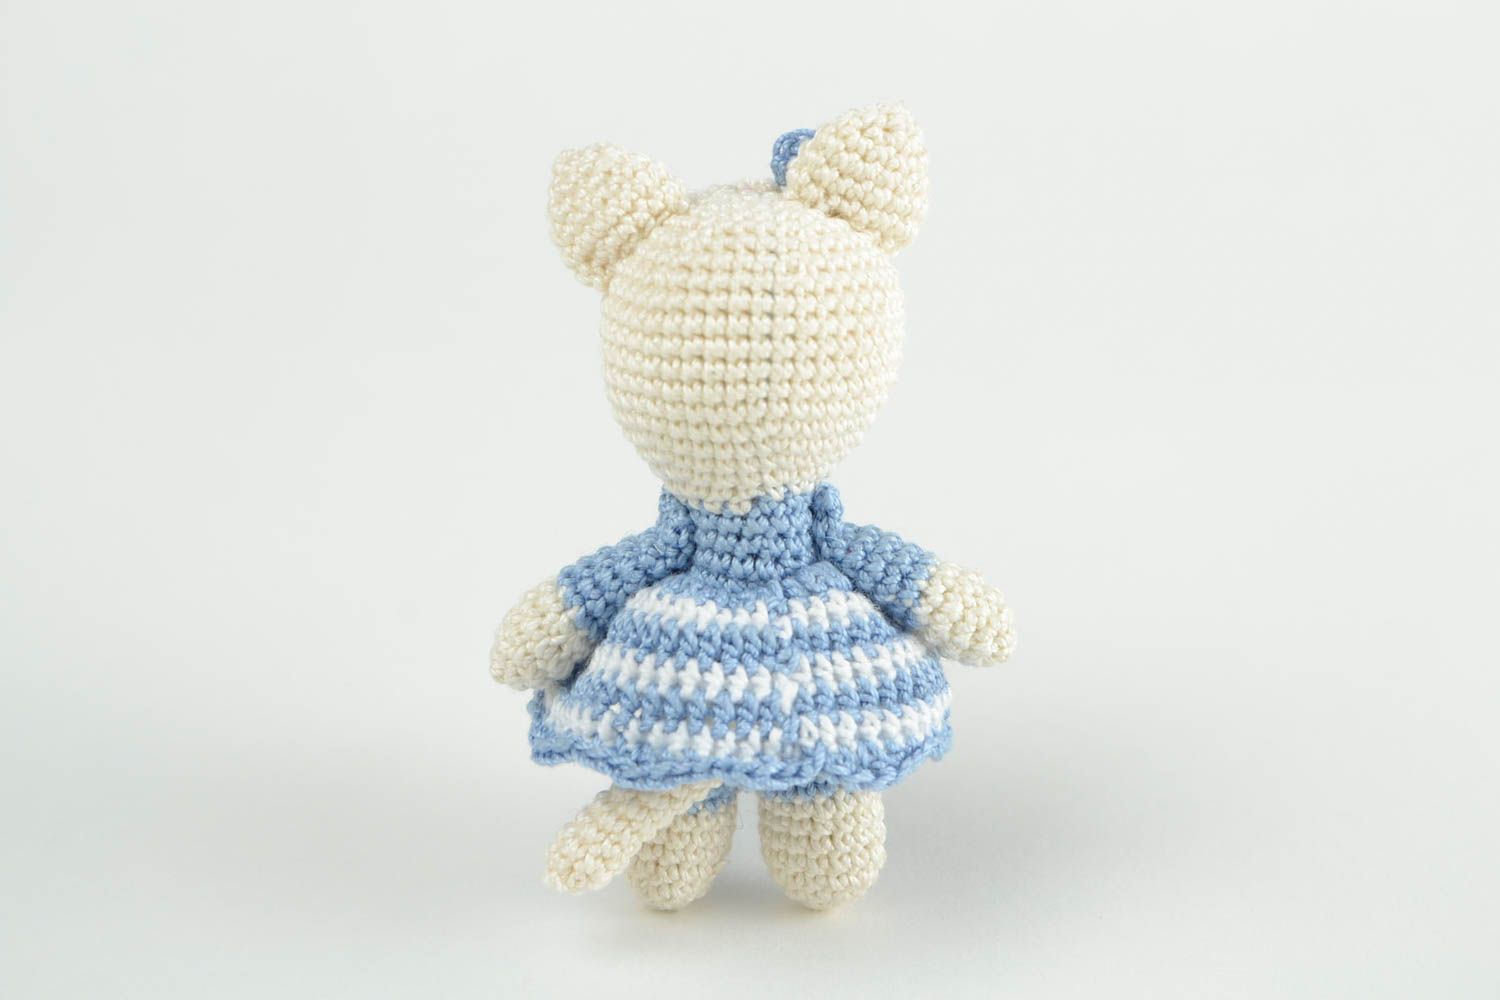 Handmade designer crocheted toy unusual cute soft toy stylish accessory photo 5